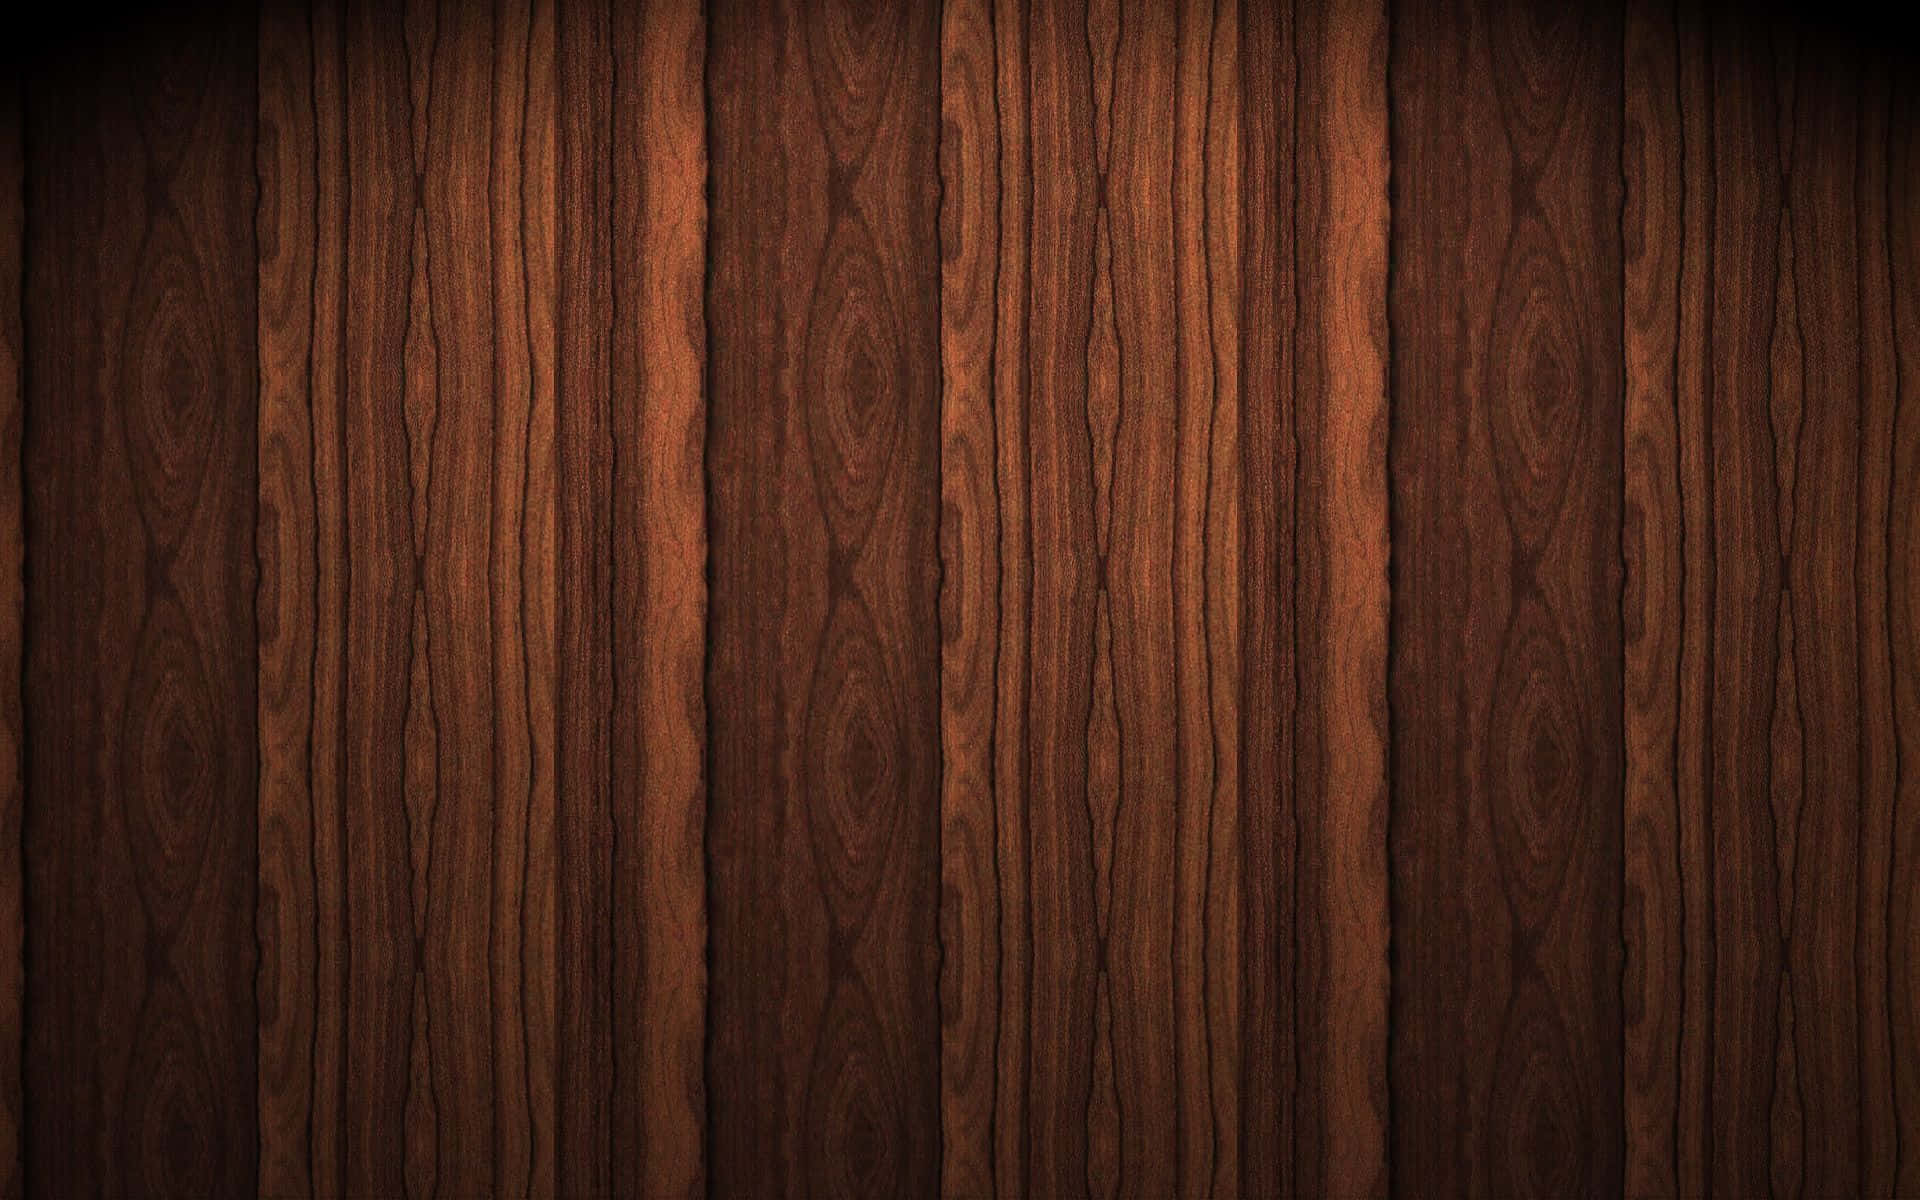 Formal Wooden Hd Wallpaper